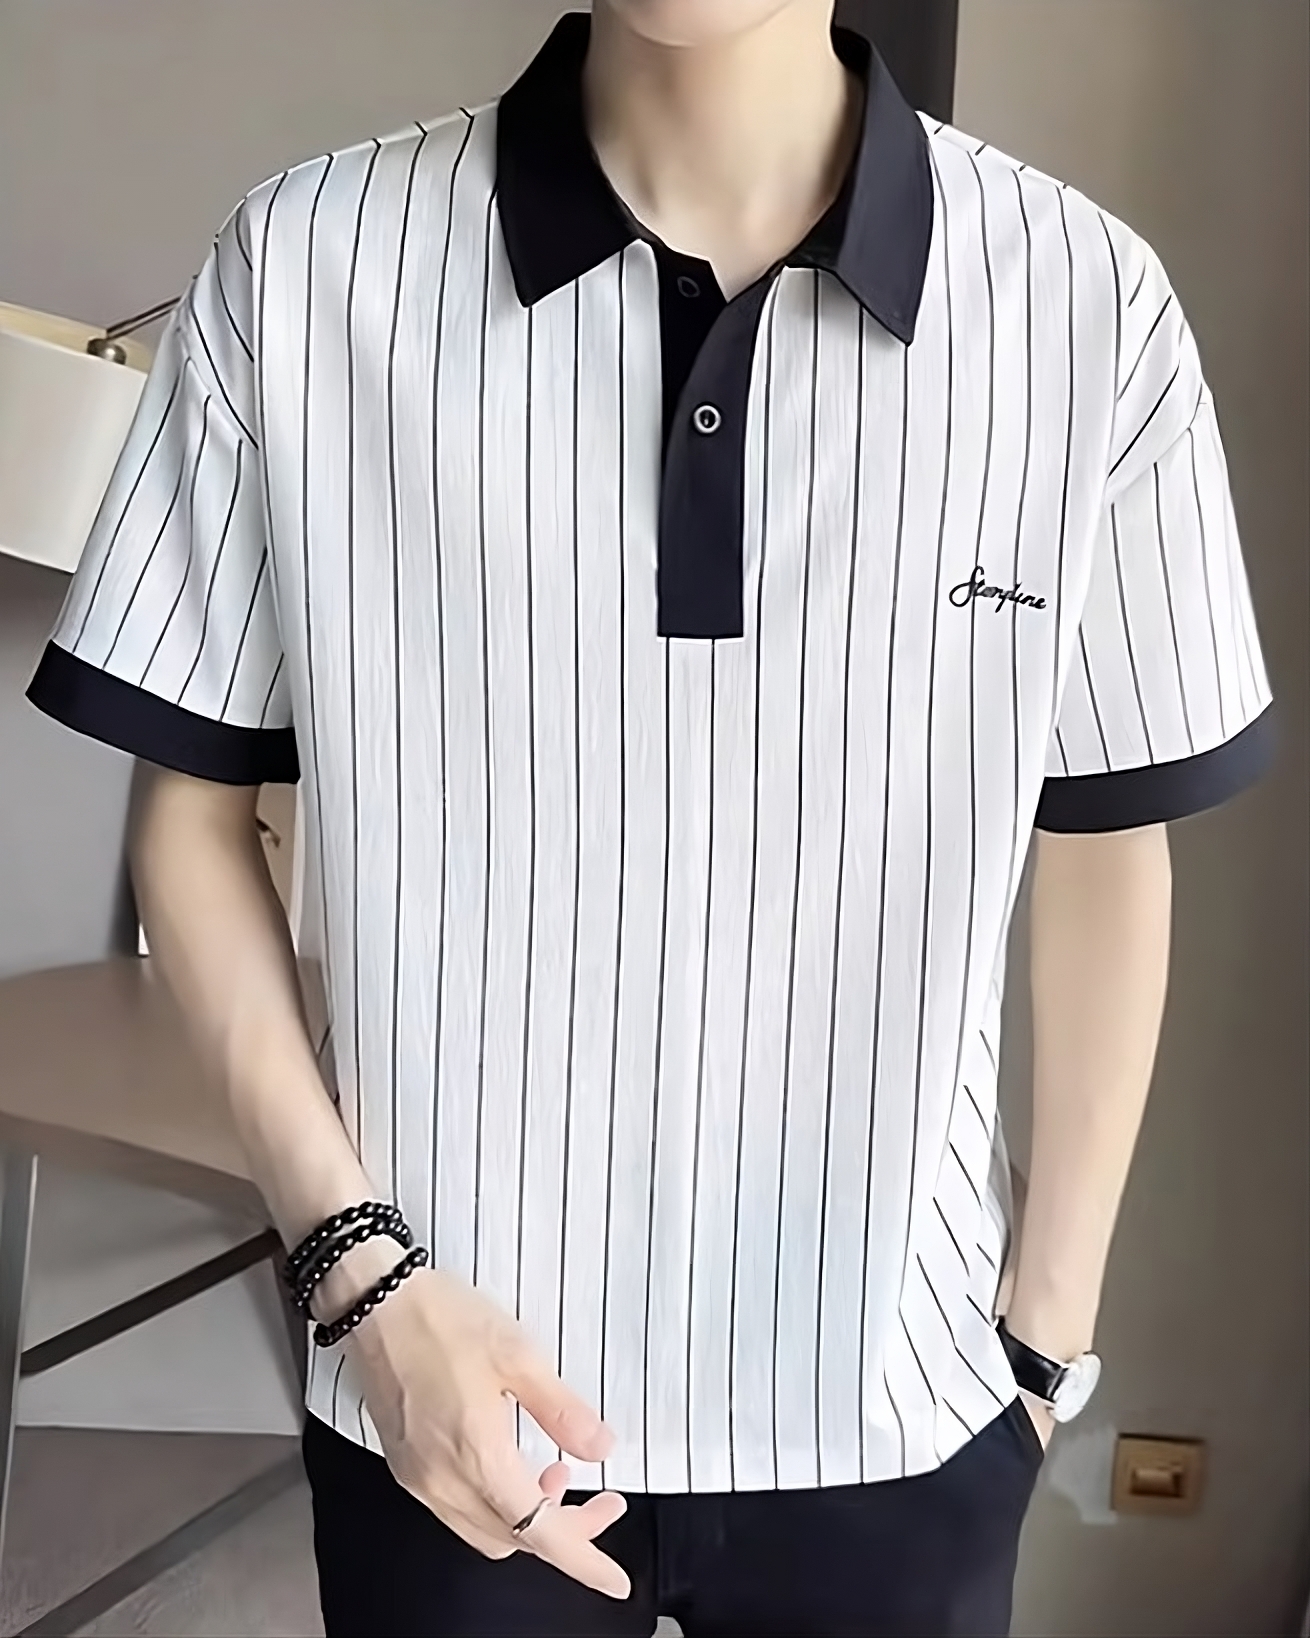 White Stripes Polo Shirt With Black Collar